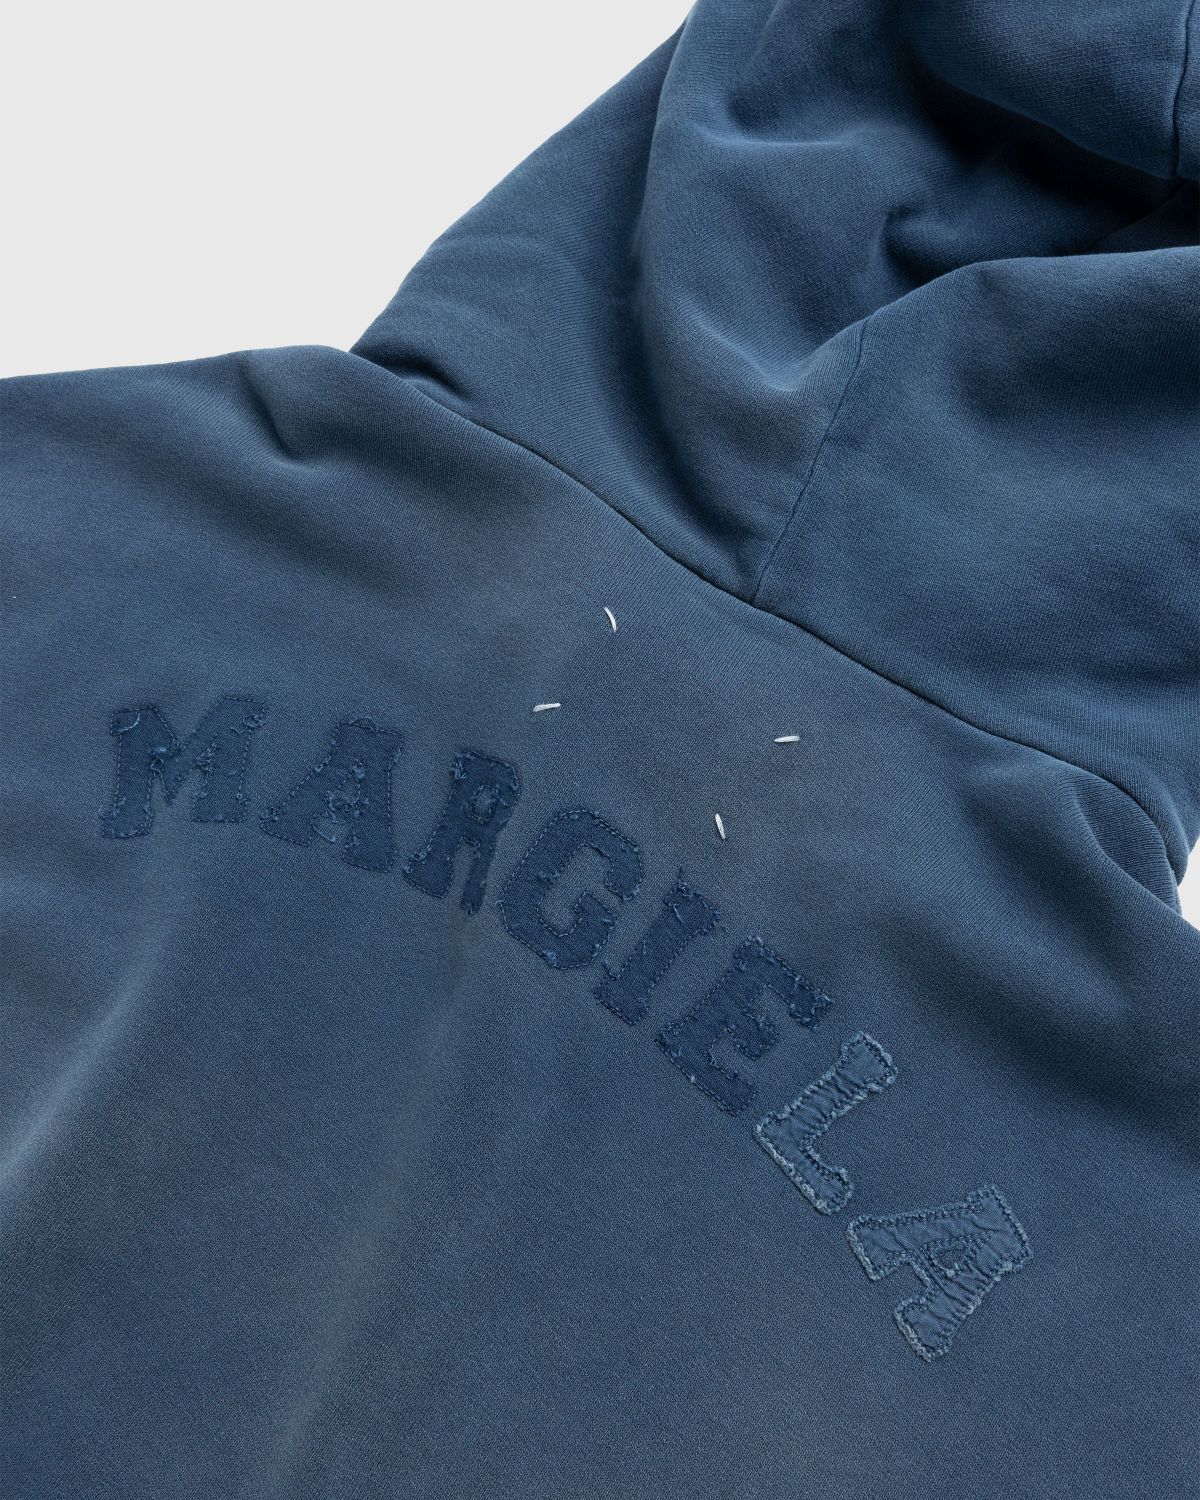 Maison Margiela – Organic Cotton Logo Hoodie Blue - Sweats - Blue - Image 7